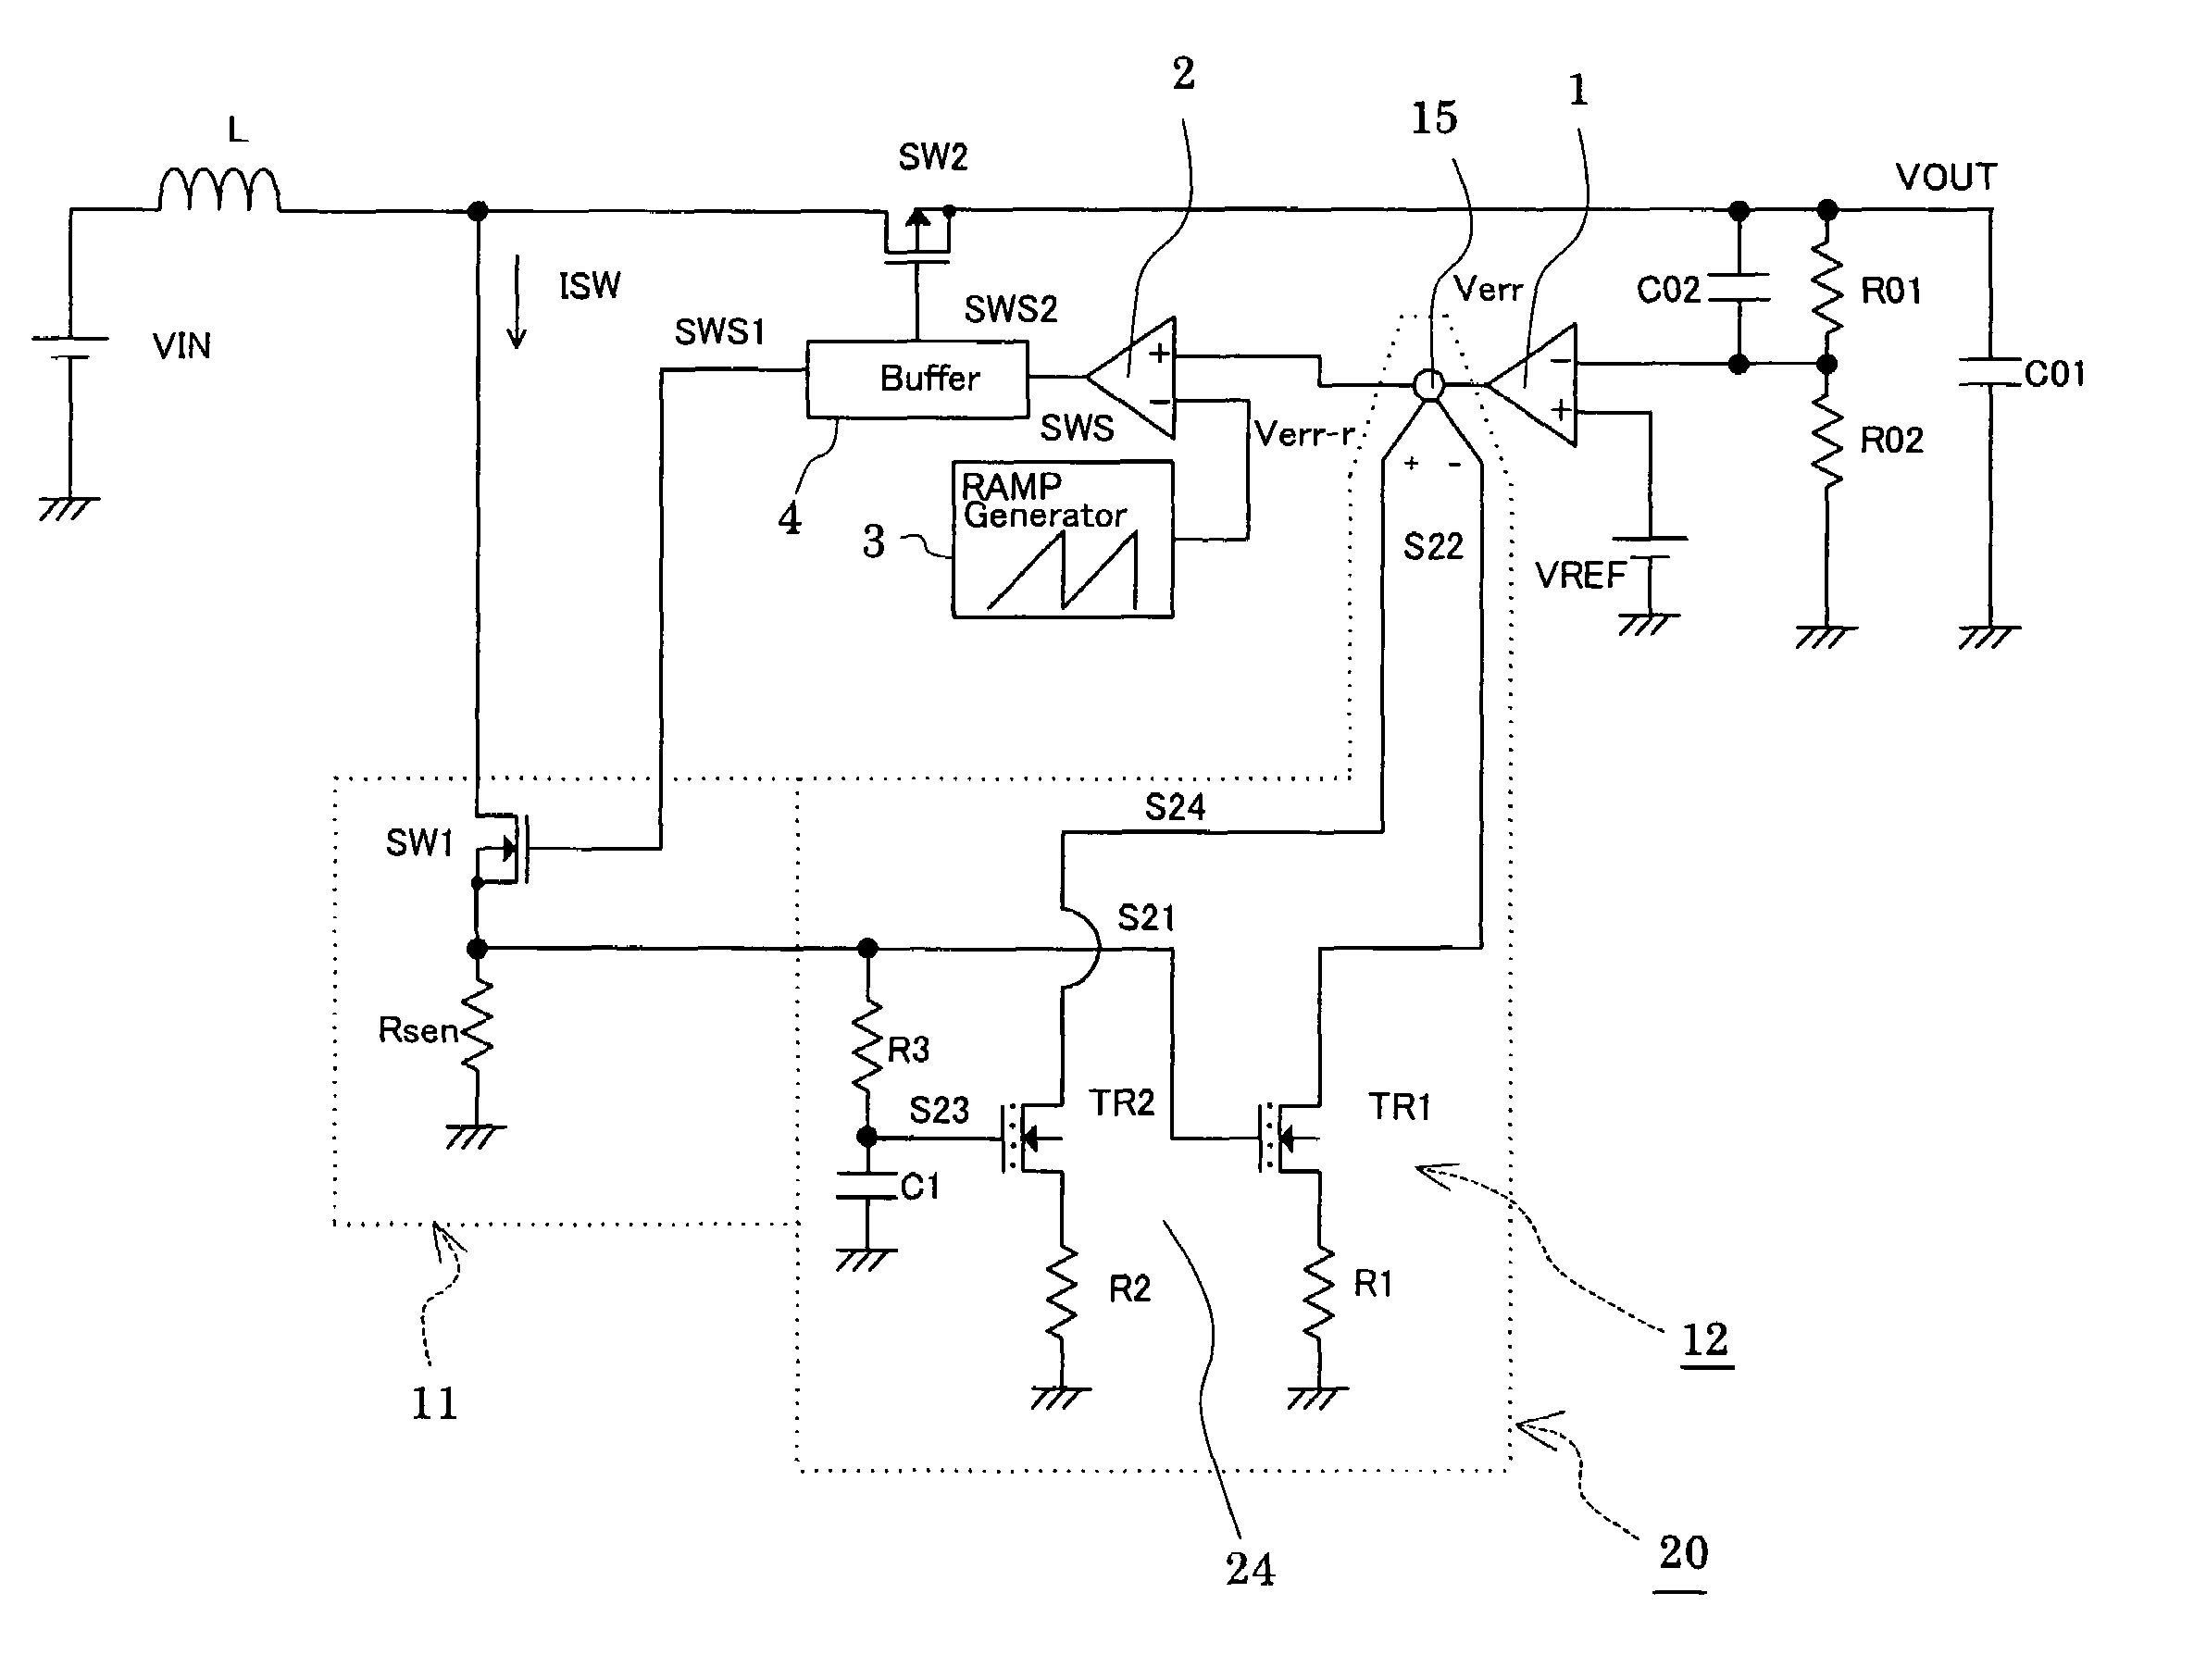 Switching power supply circuit